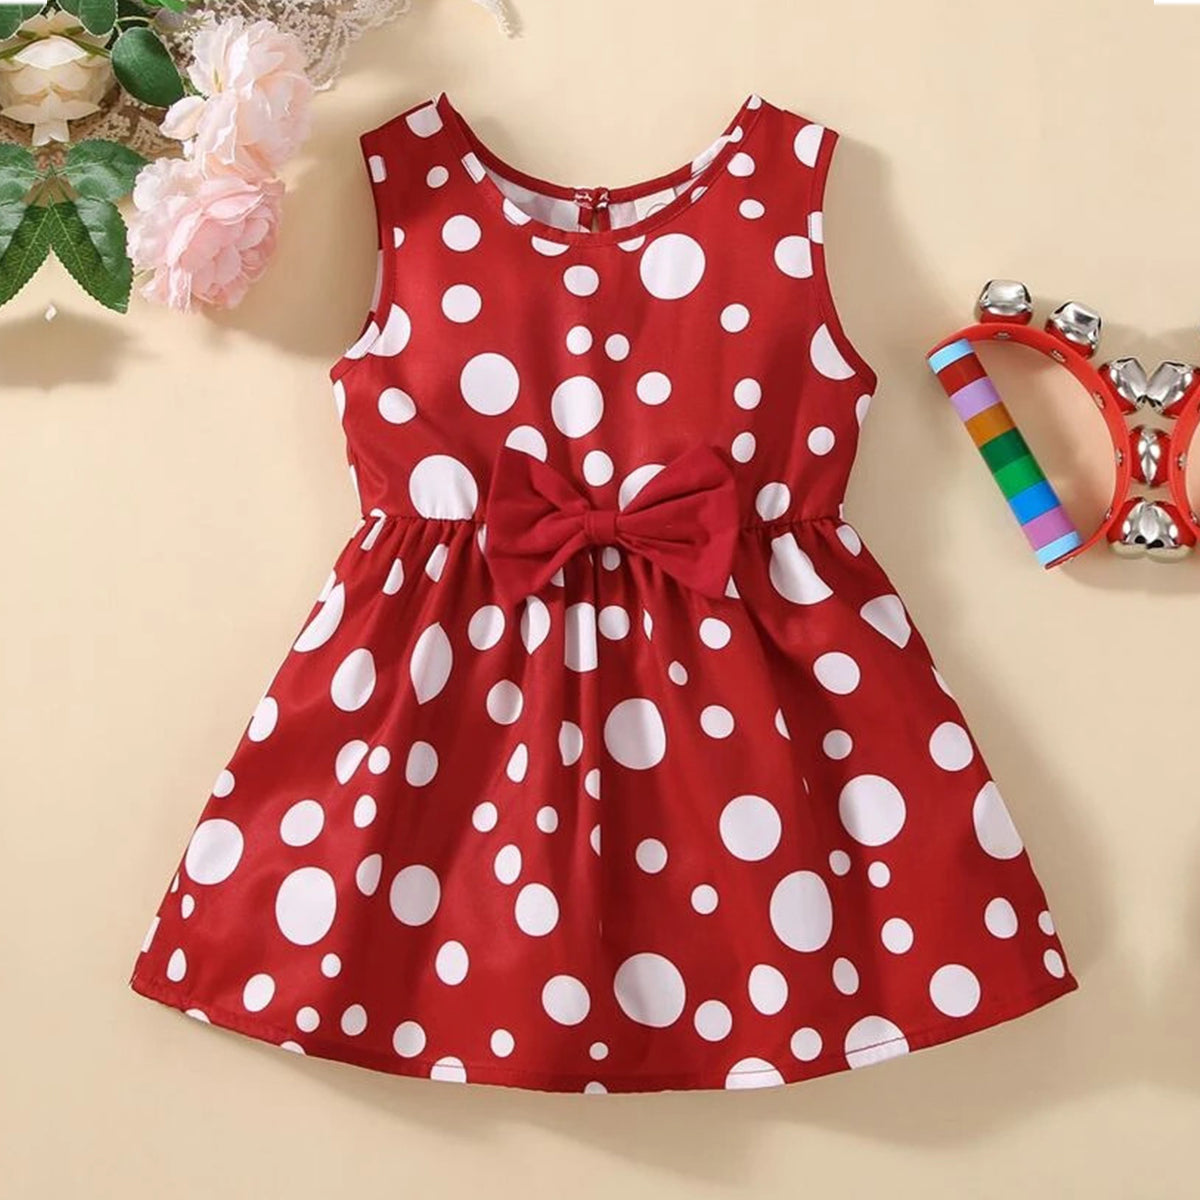 BabyGirl's Stylish Designer Cotton Sunflower & Maroon Dot Round Tunic Combo Frocks & Dresses for Kids.